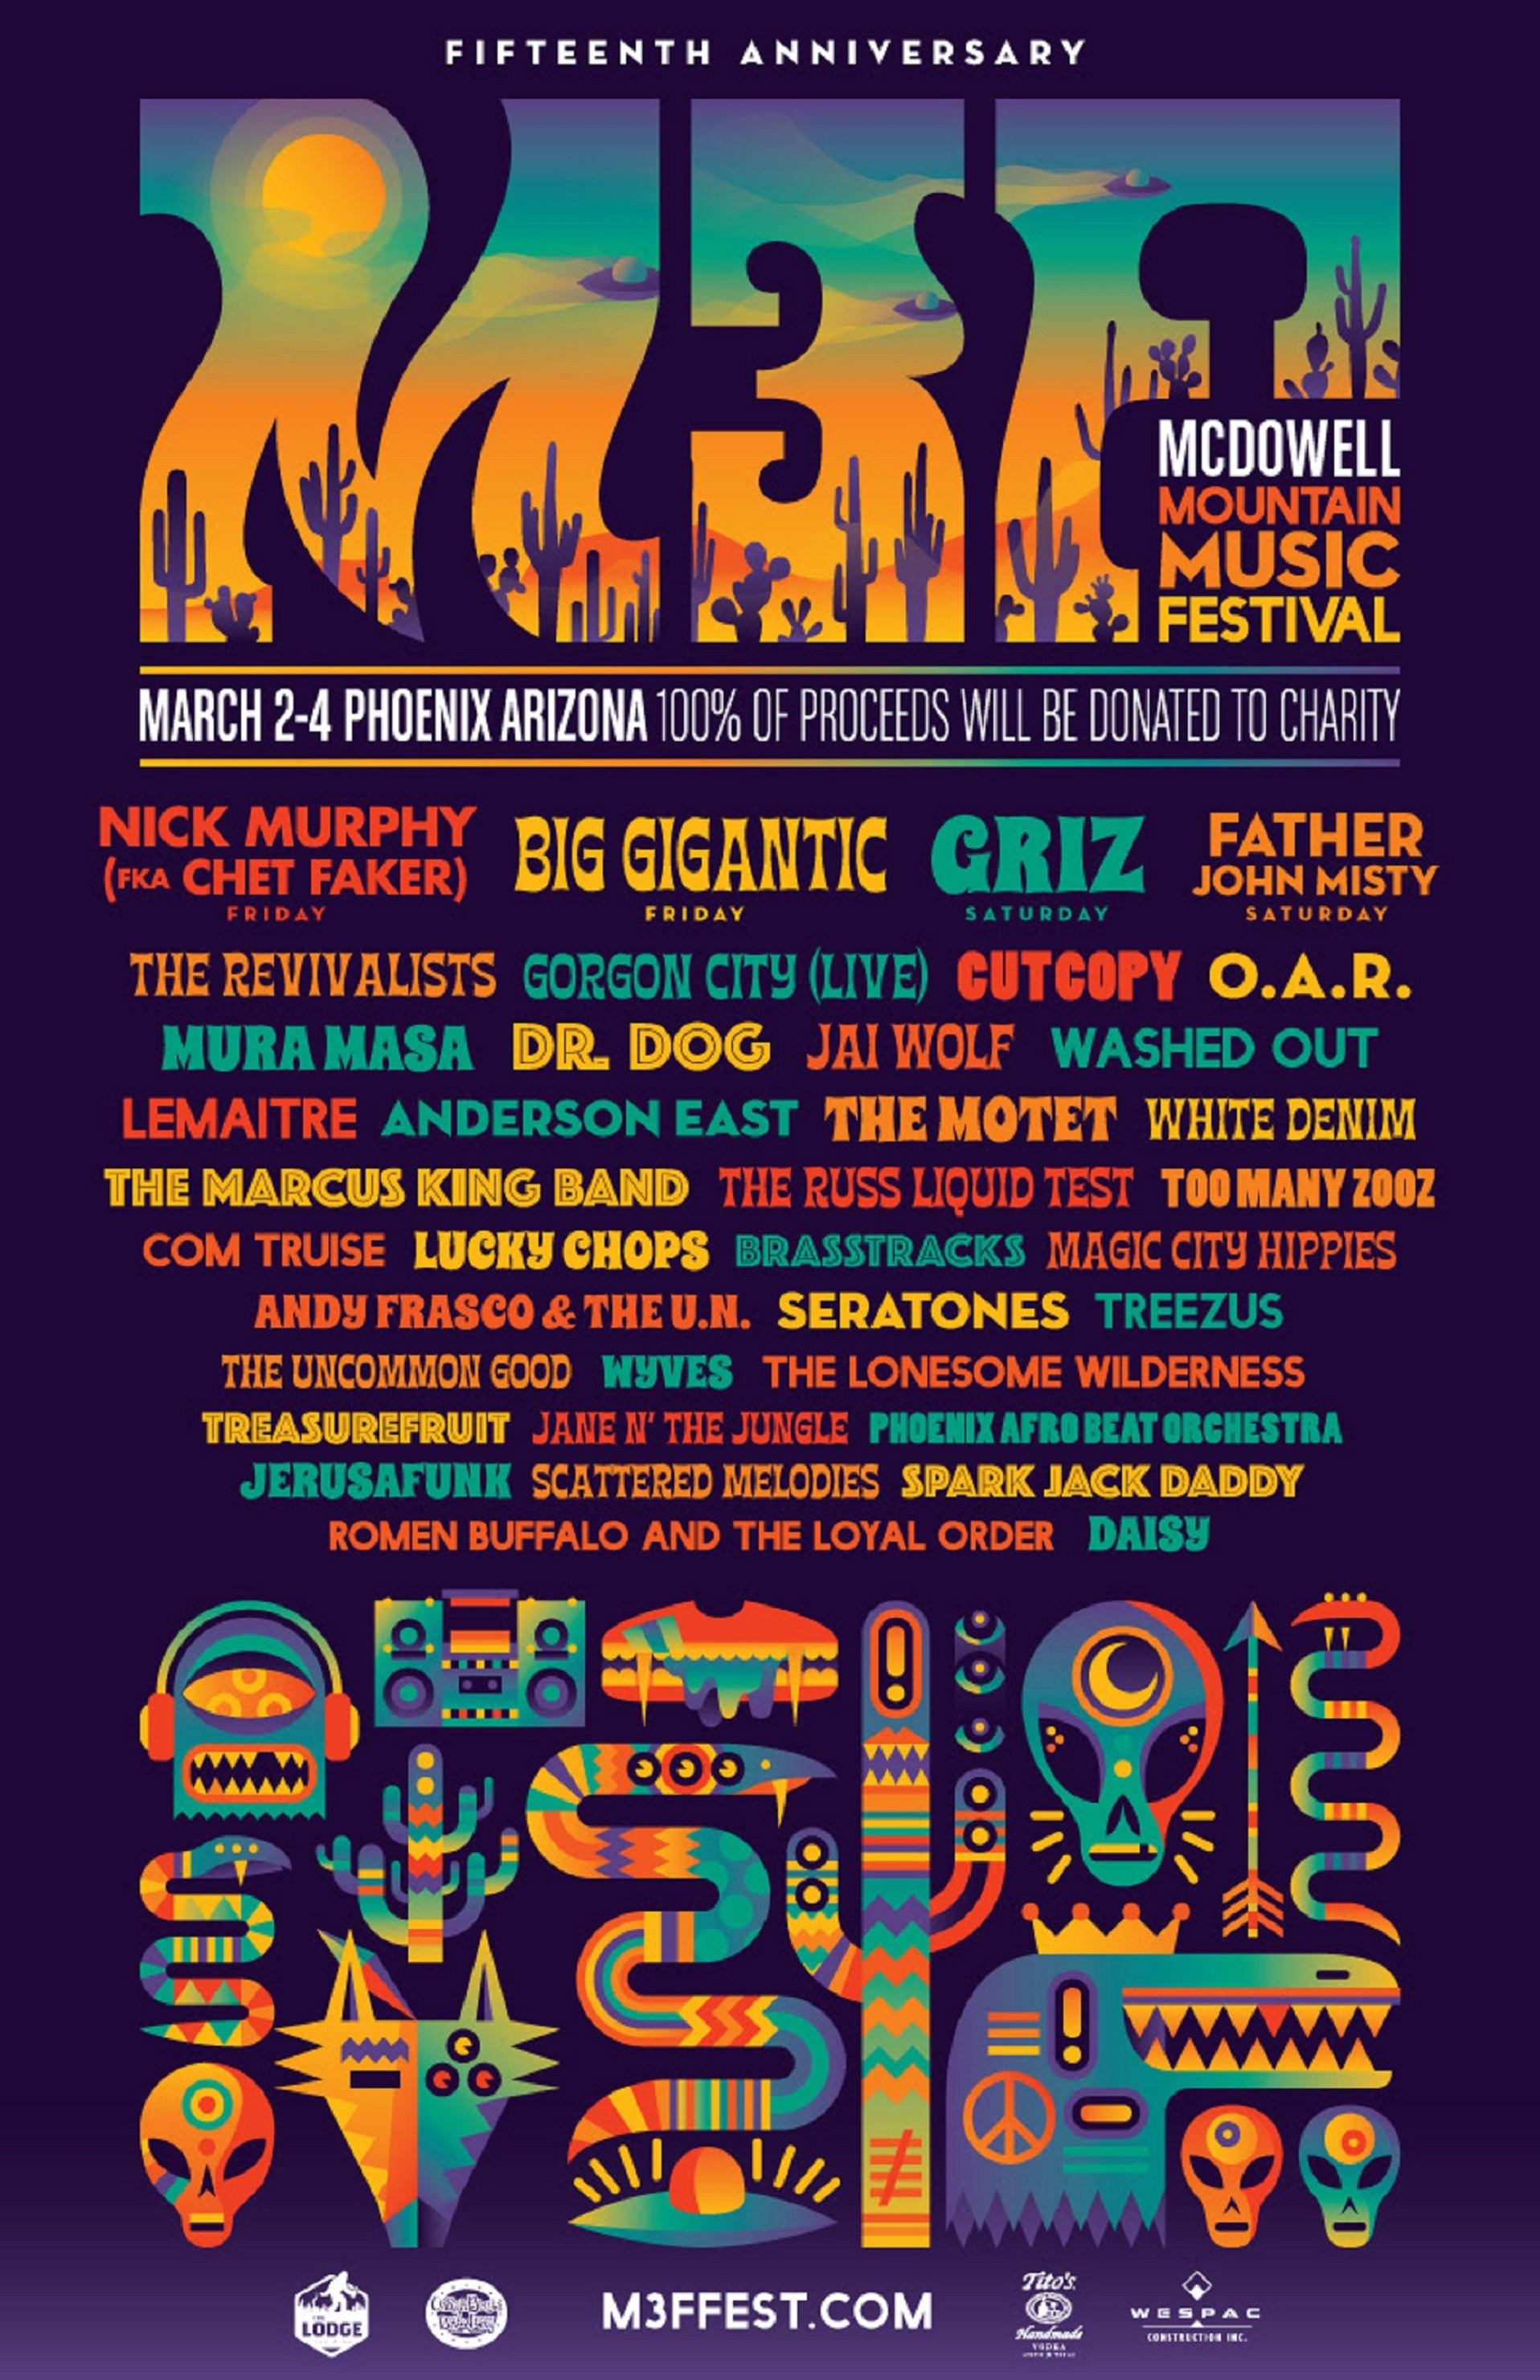 McDowell Mountain Music Festival 2018 Lineup